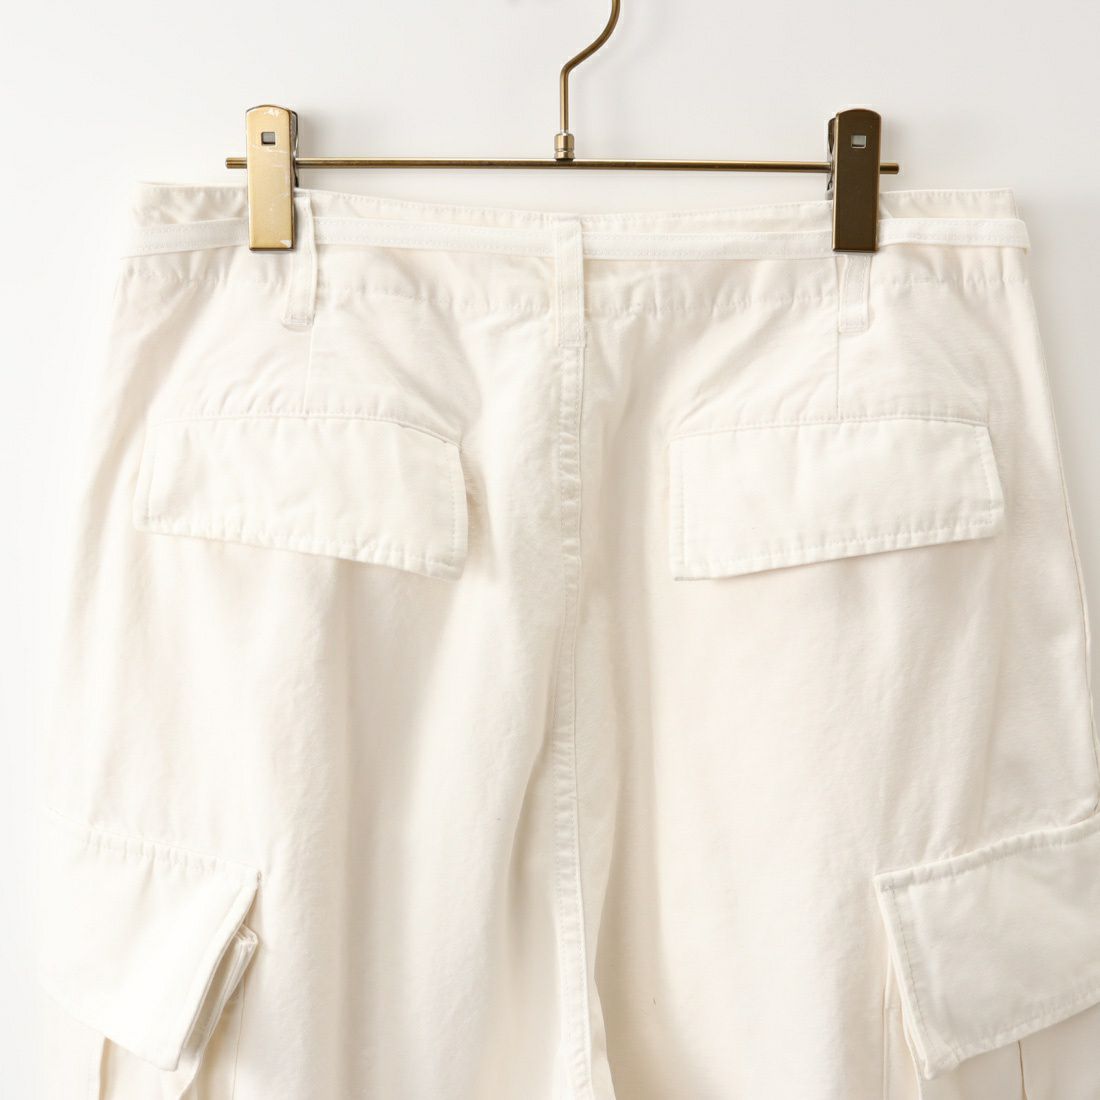 Jeans Factory Clothes [ジーンズファクトリークローズ] ワイドBDUパンツ [JFC-231-037] WHITE